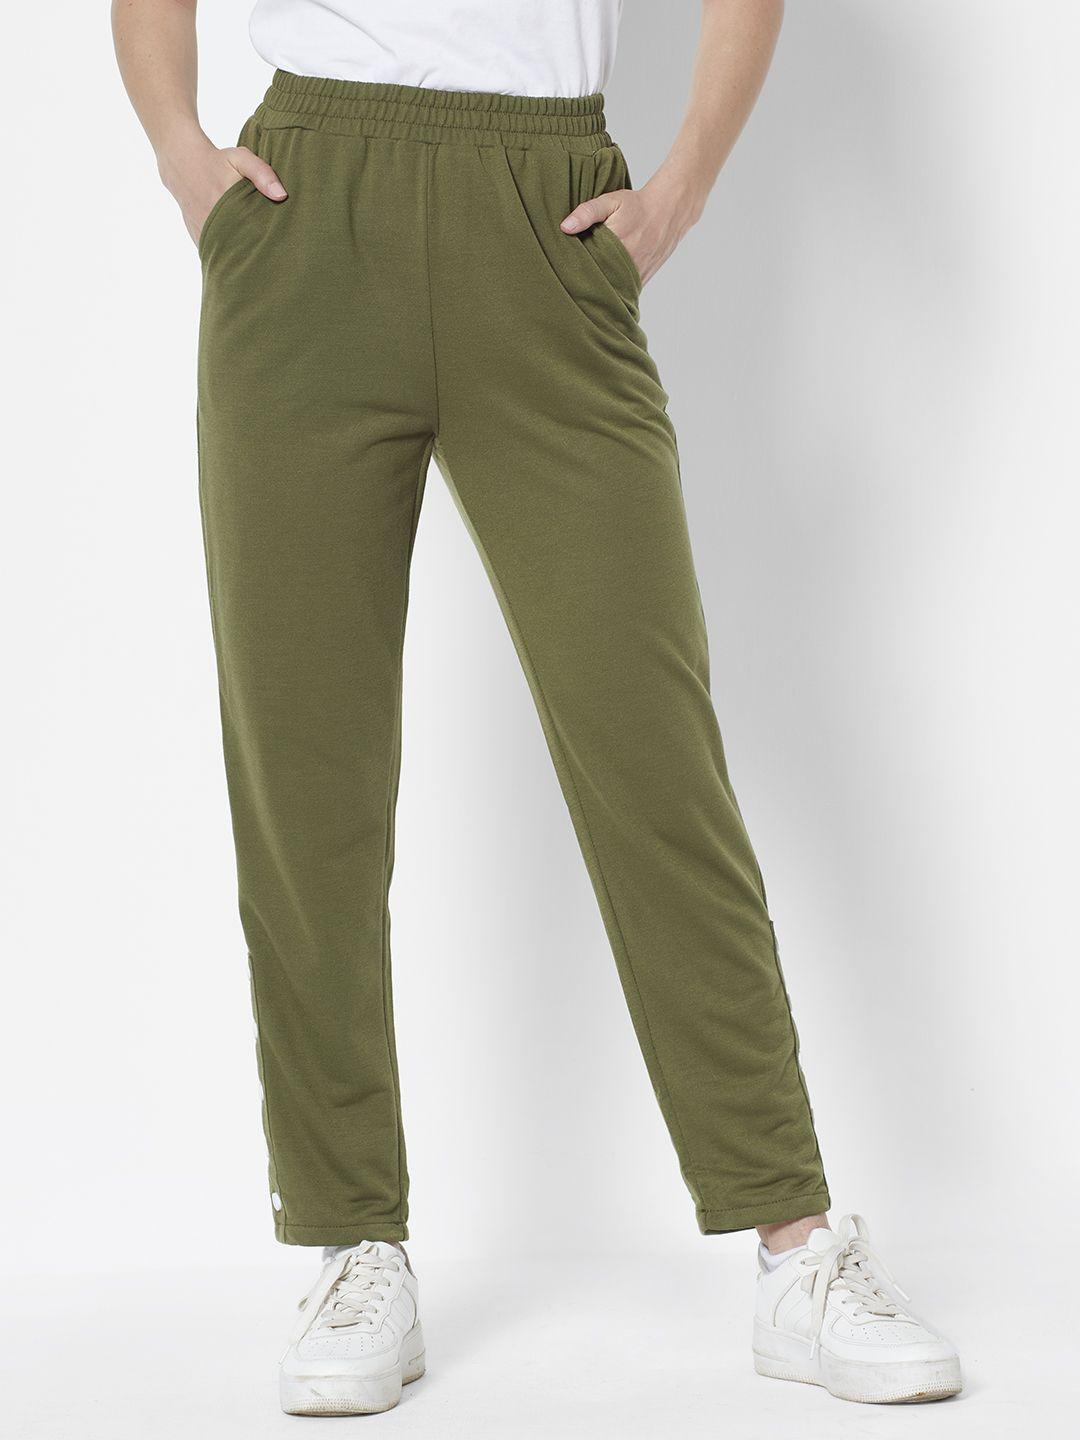 urbanic women olive green solid track pants